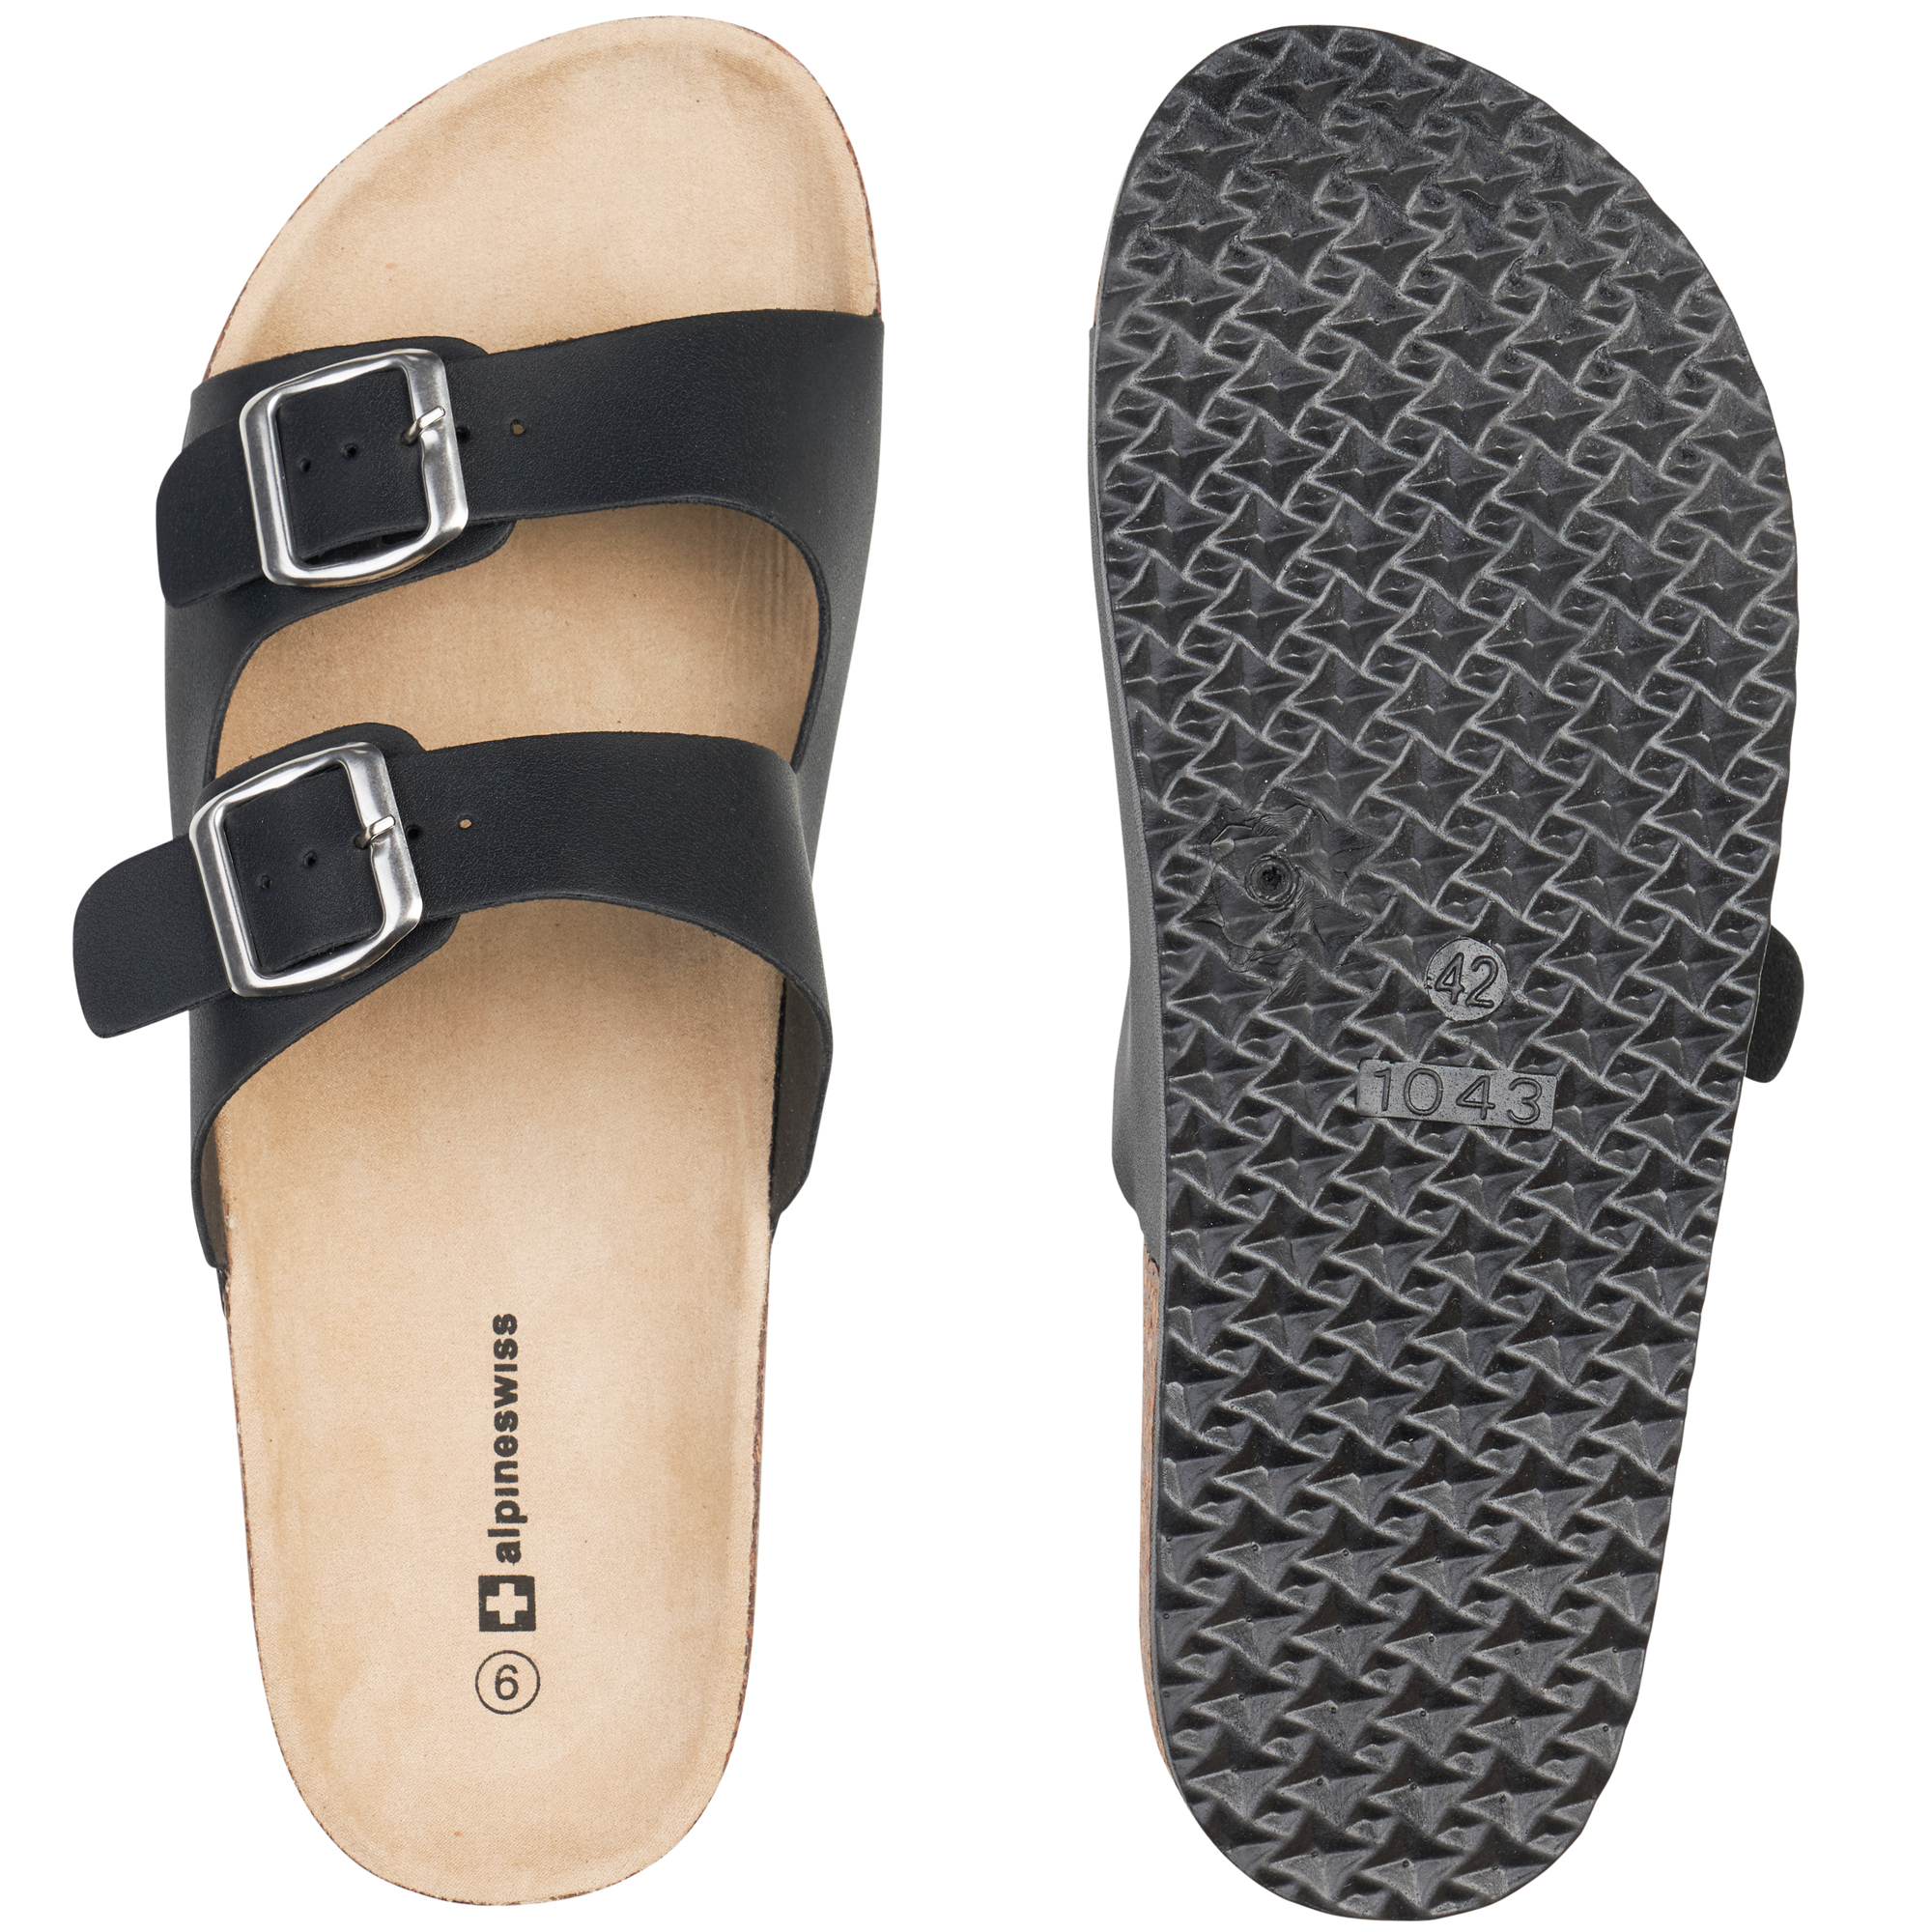 Alpine Swiss Mens Double Strap Slide Sandals EVA Sole Flat Casual Comfort Shoes - image 3 of 5